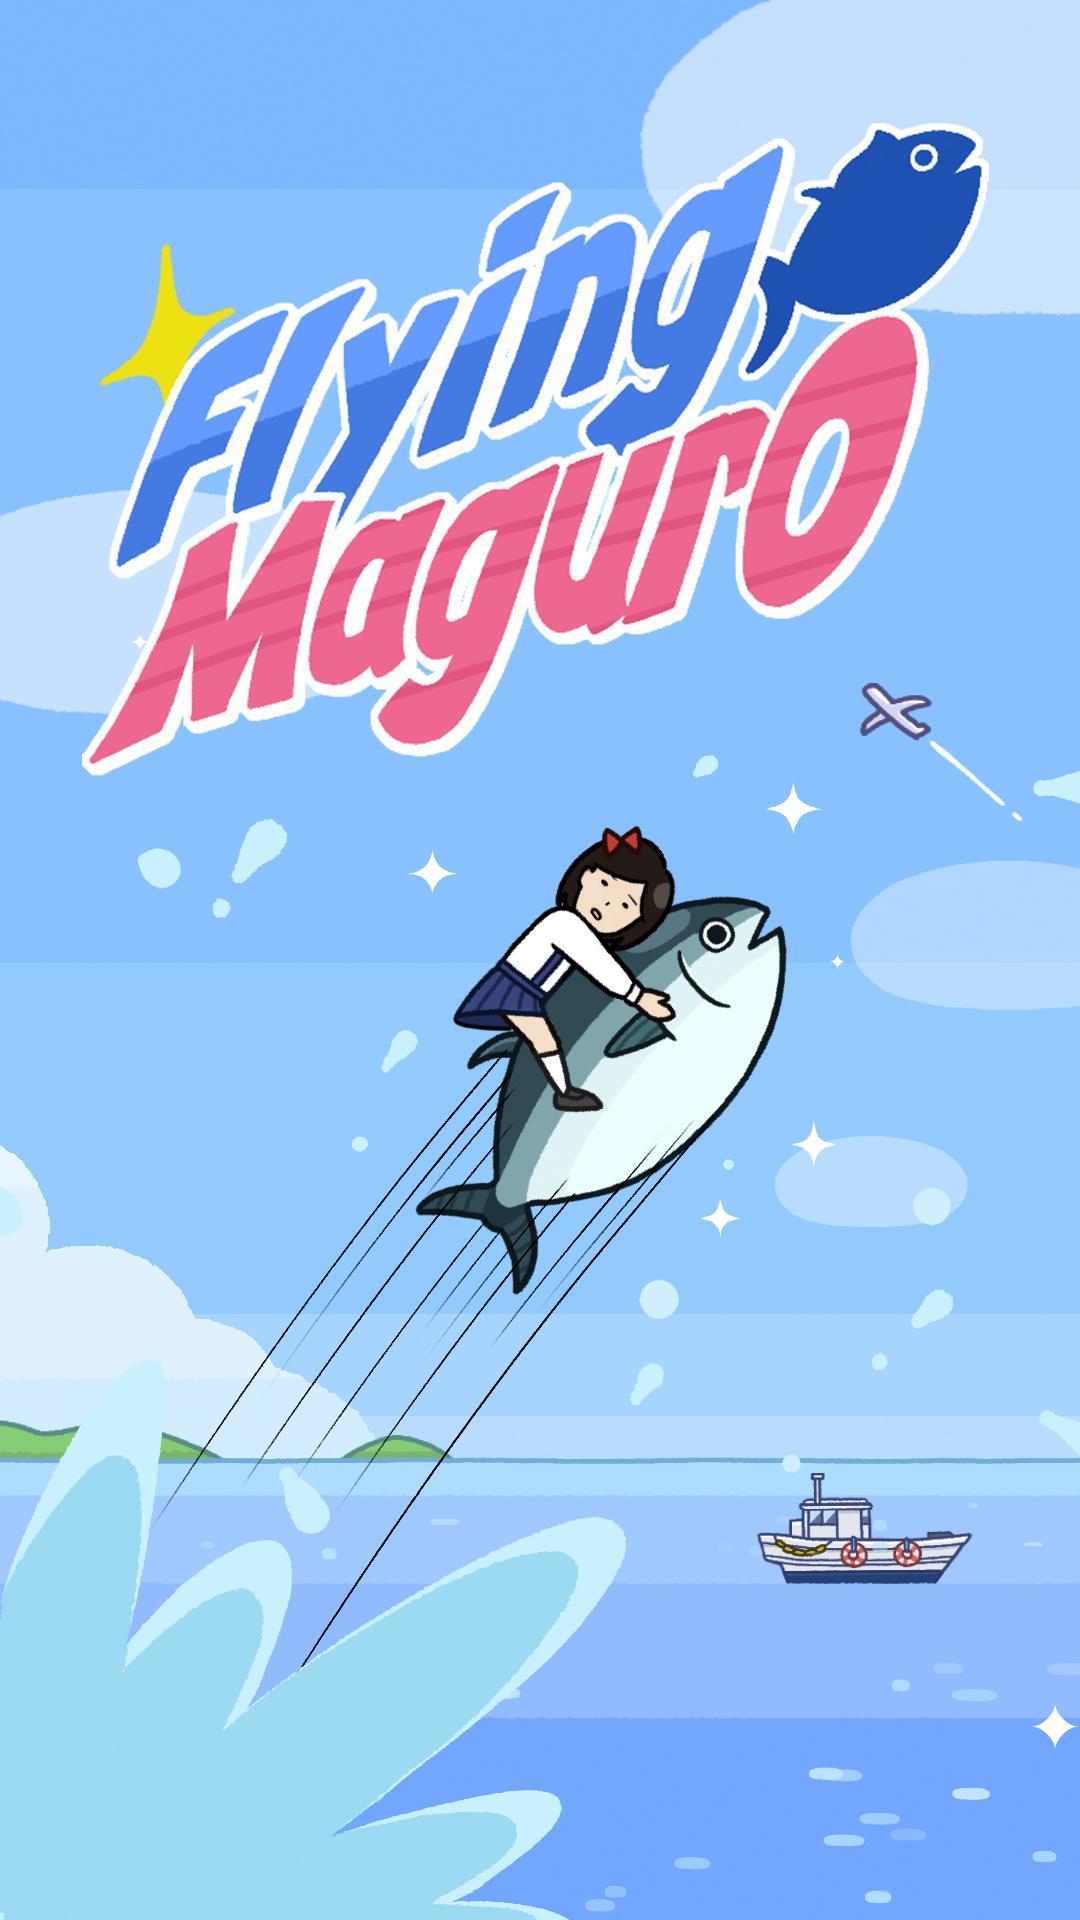 Screenshot 1 of Fliegender Maguro 1.0.3